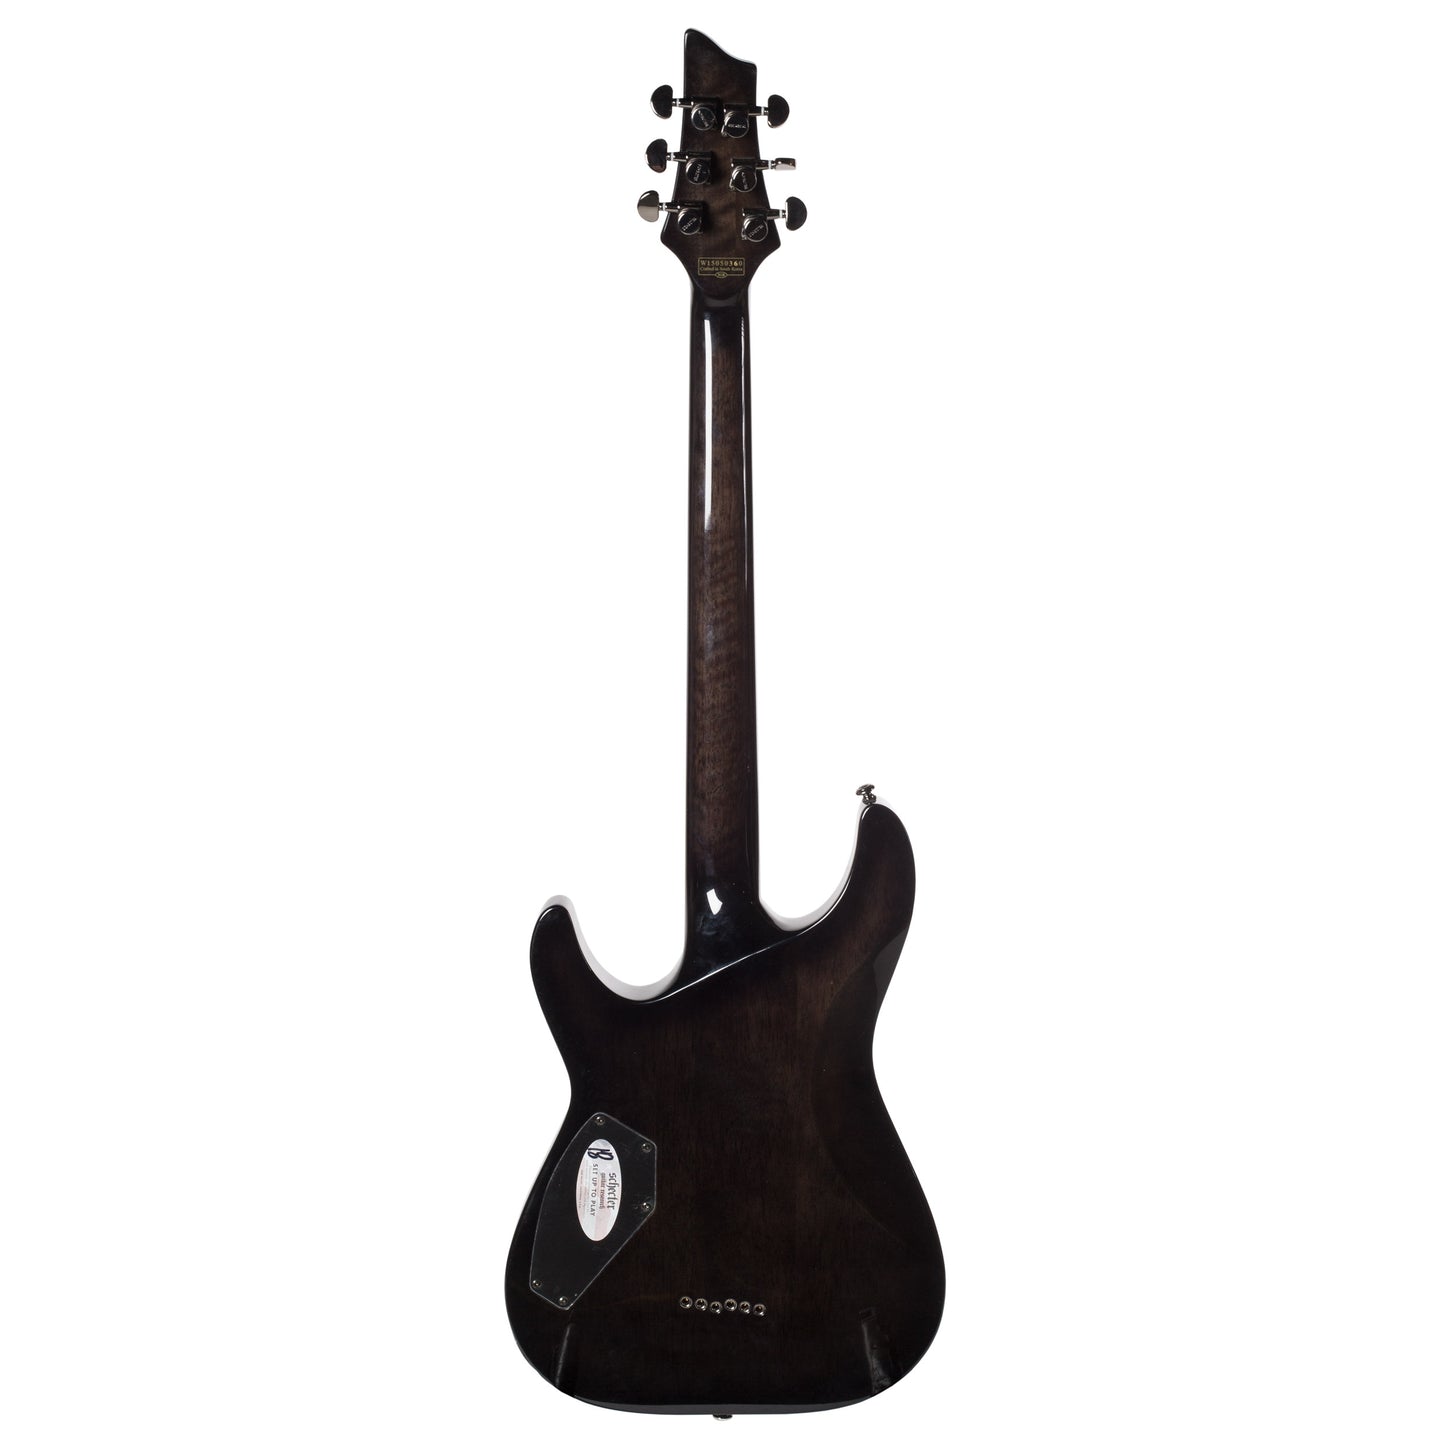 Schecter Hellraiser C-1 Passive Electric Guitar Transparent Black Burst (799)